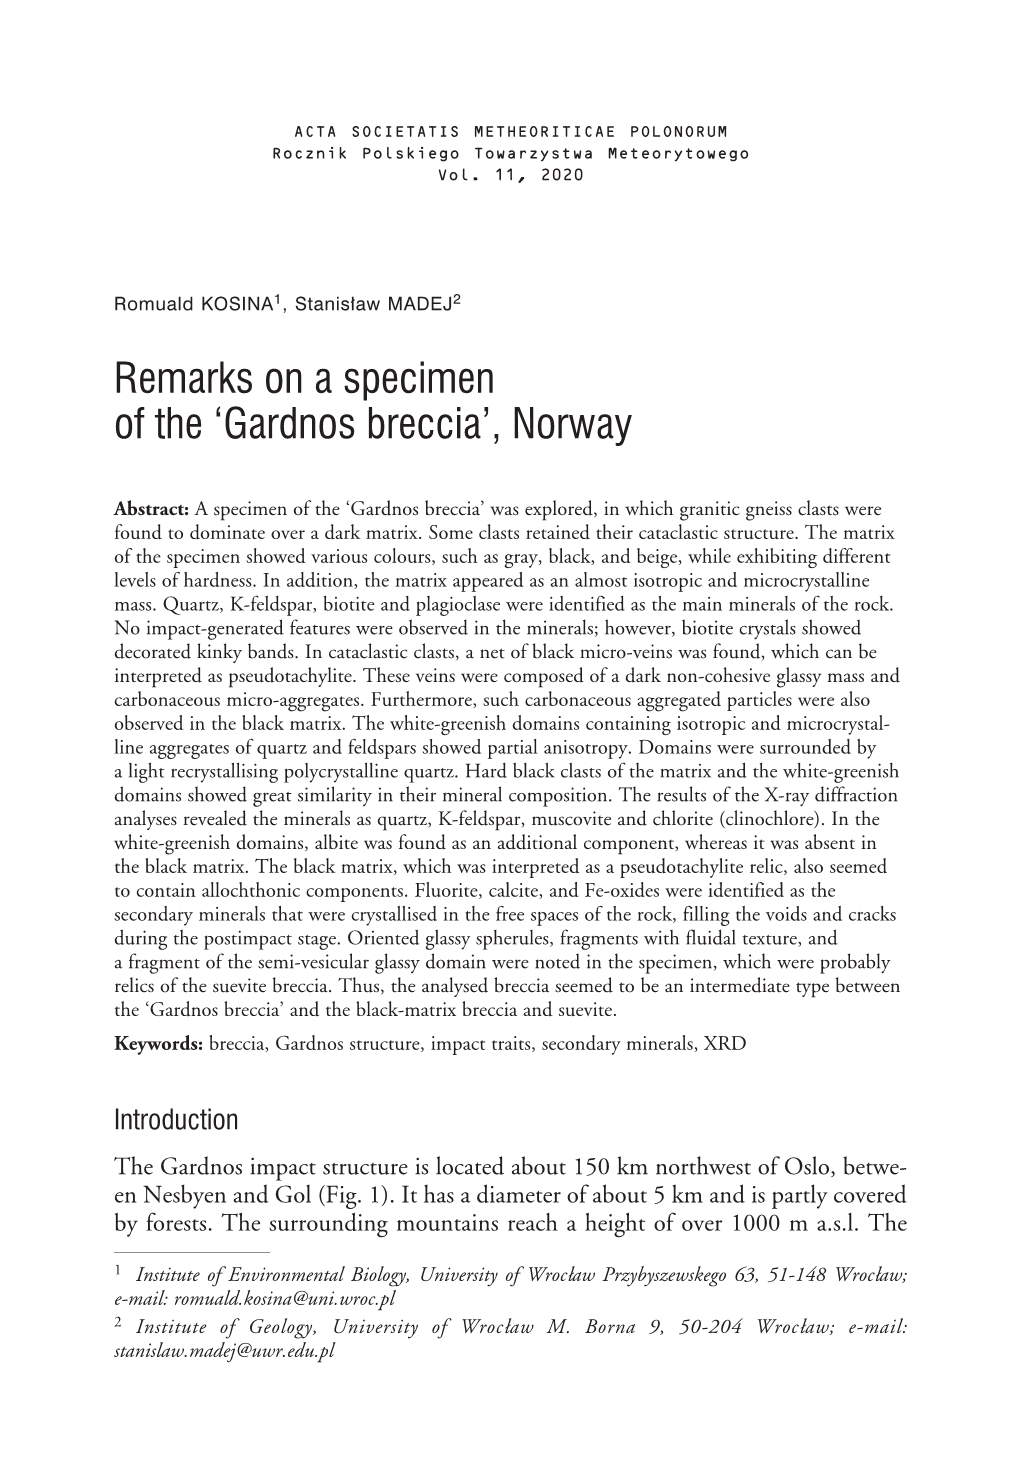 Remarks on a Specimen of the 'Gardnos Breccia', Norway